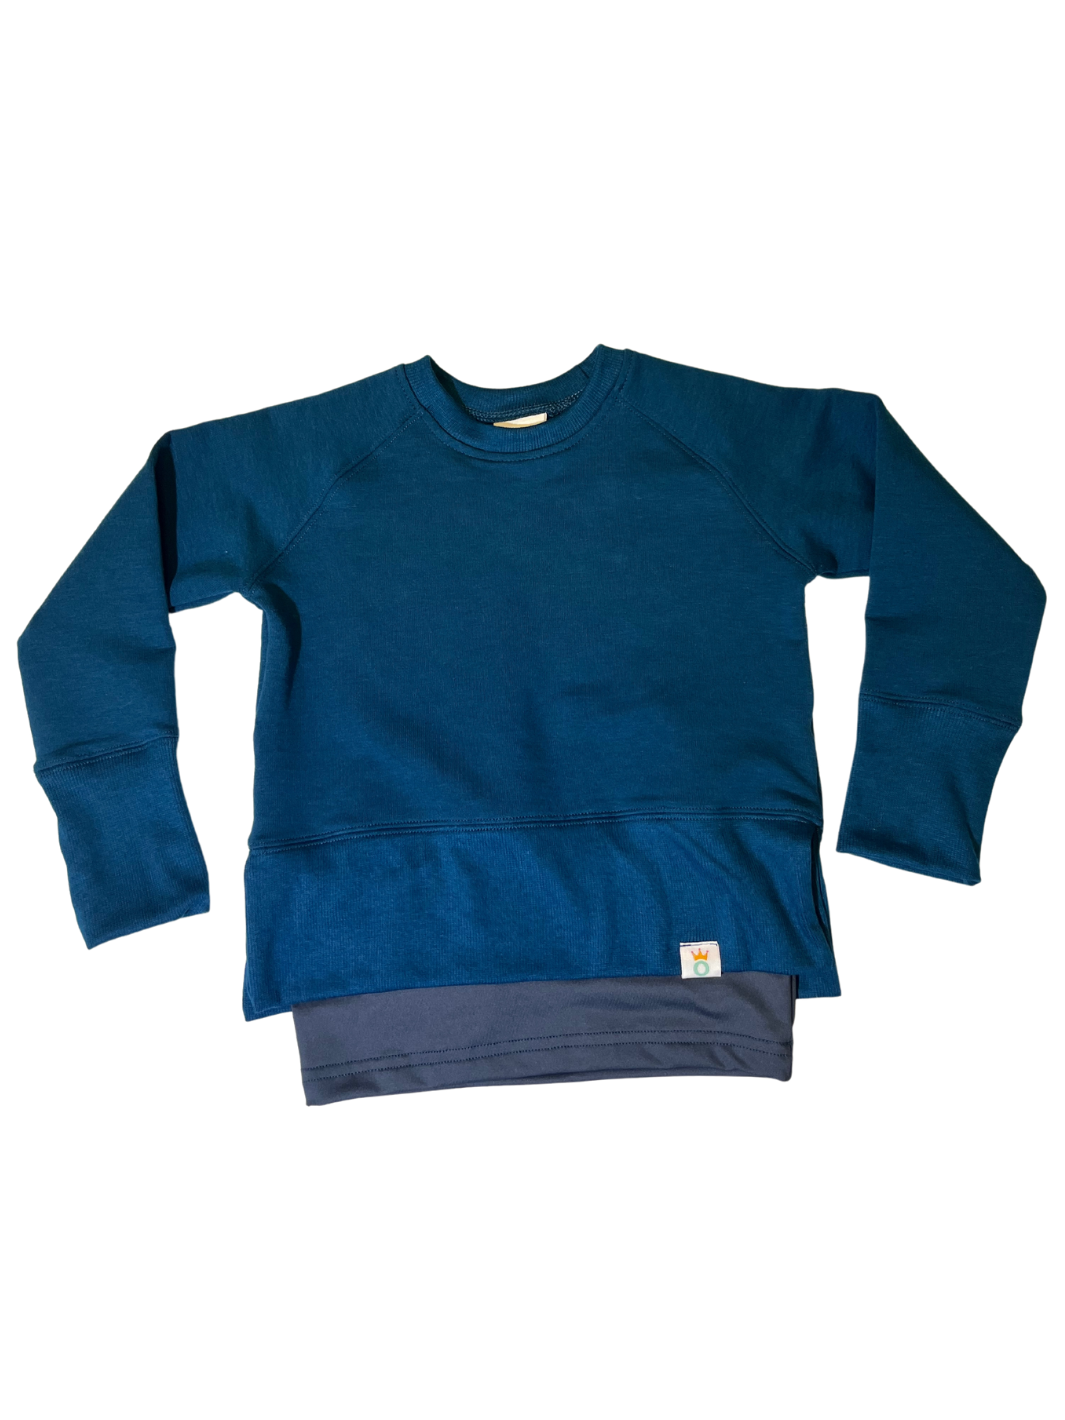 Moroccan Blue Crewneck Sweater